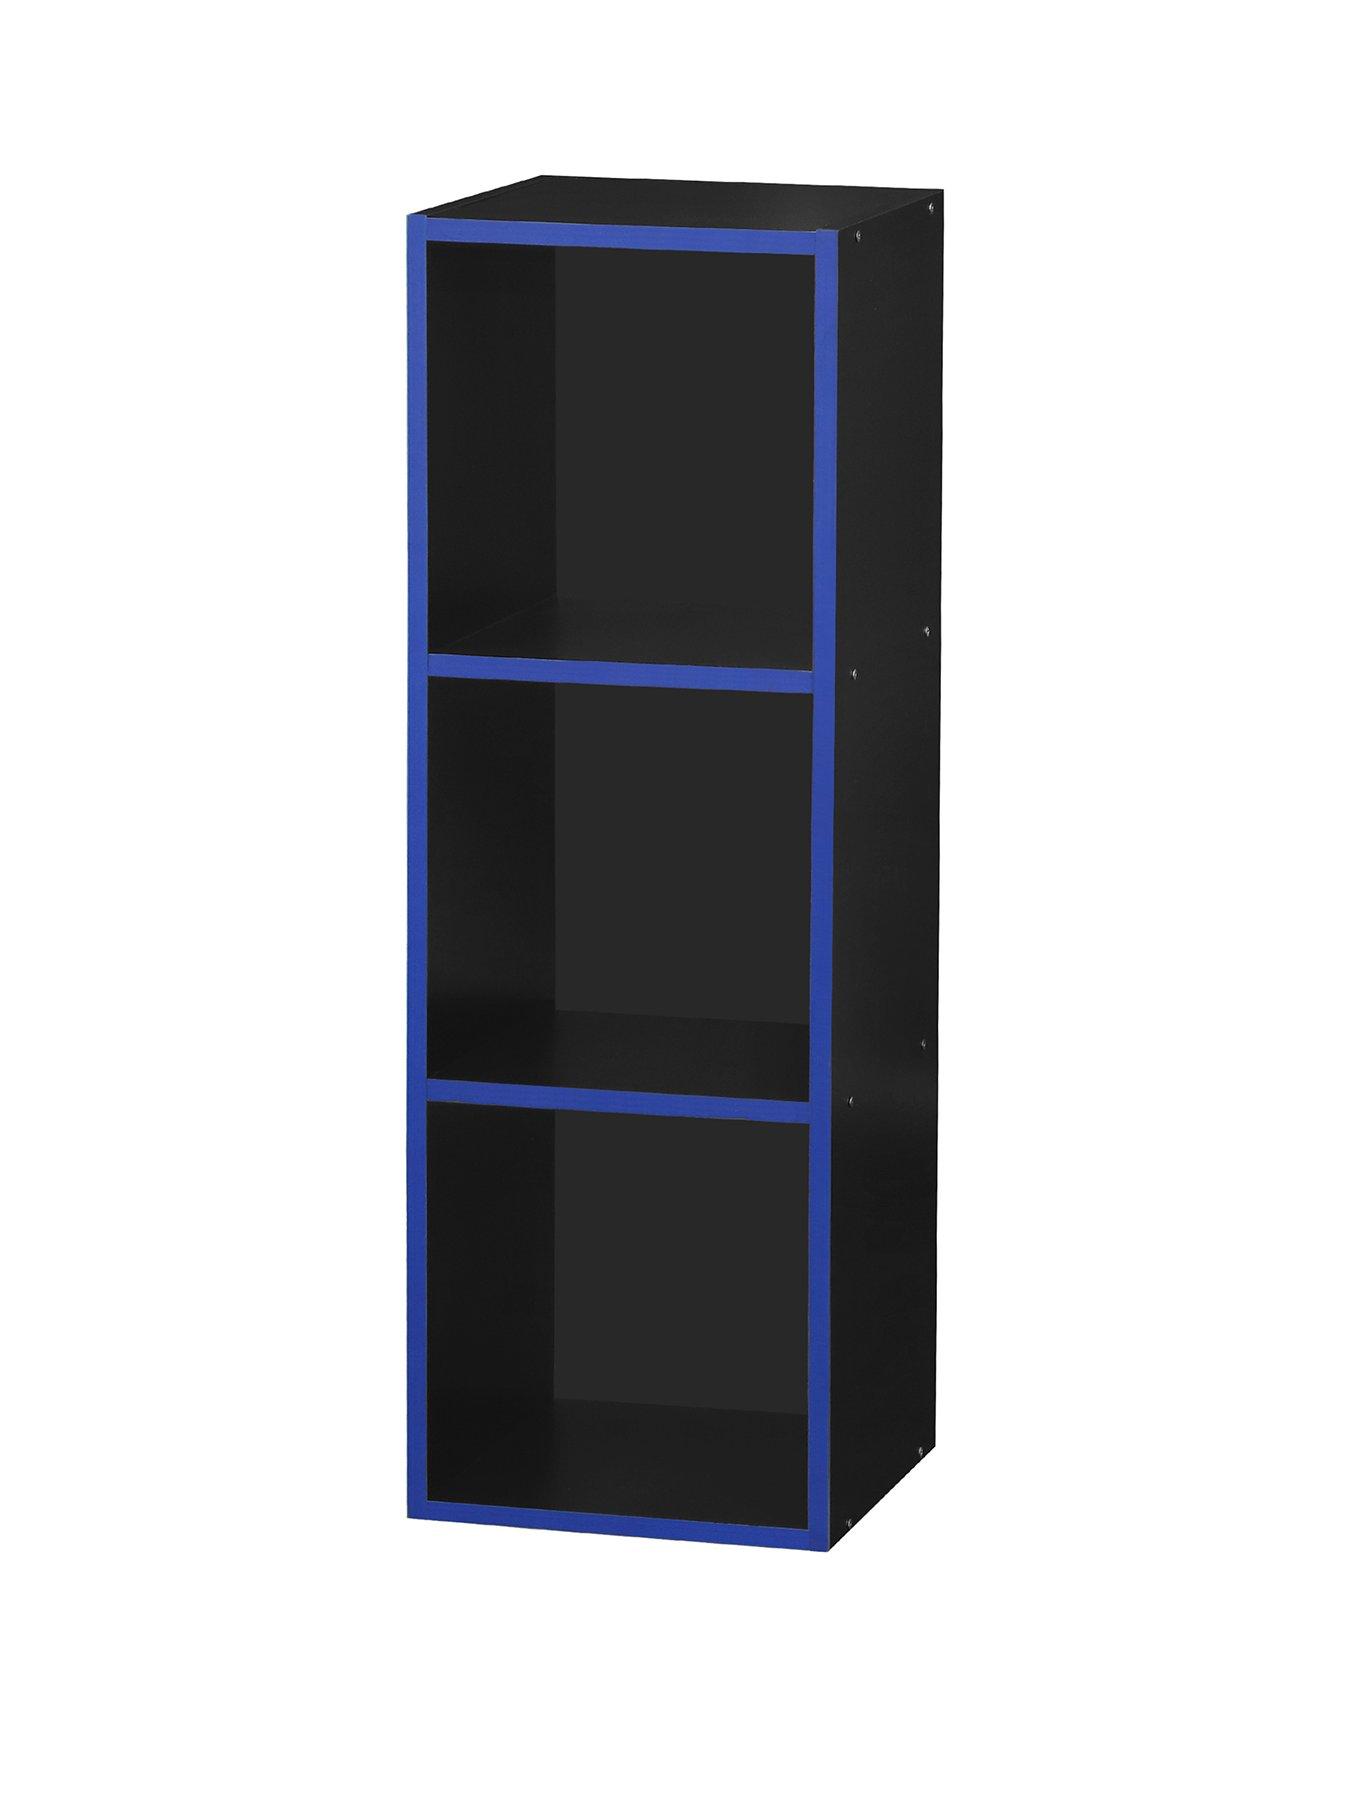 11 8 Cube Organizer Shelf White - Room Essentials™